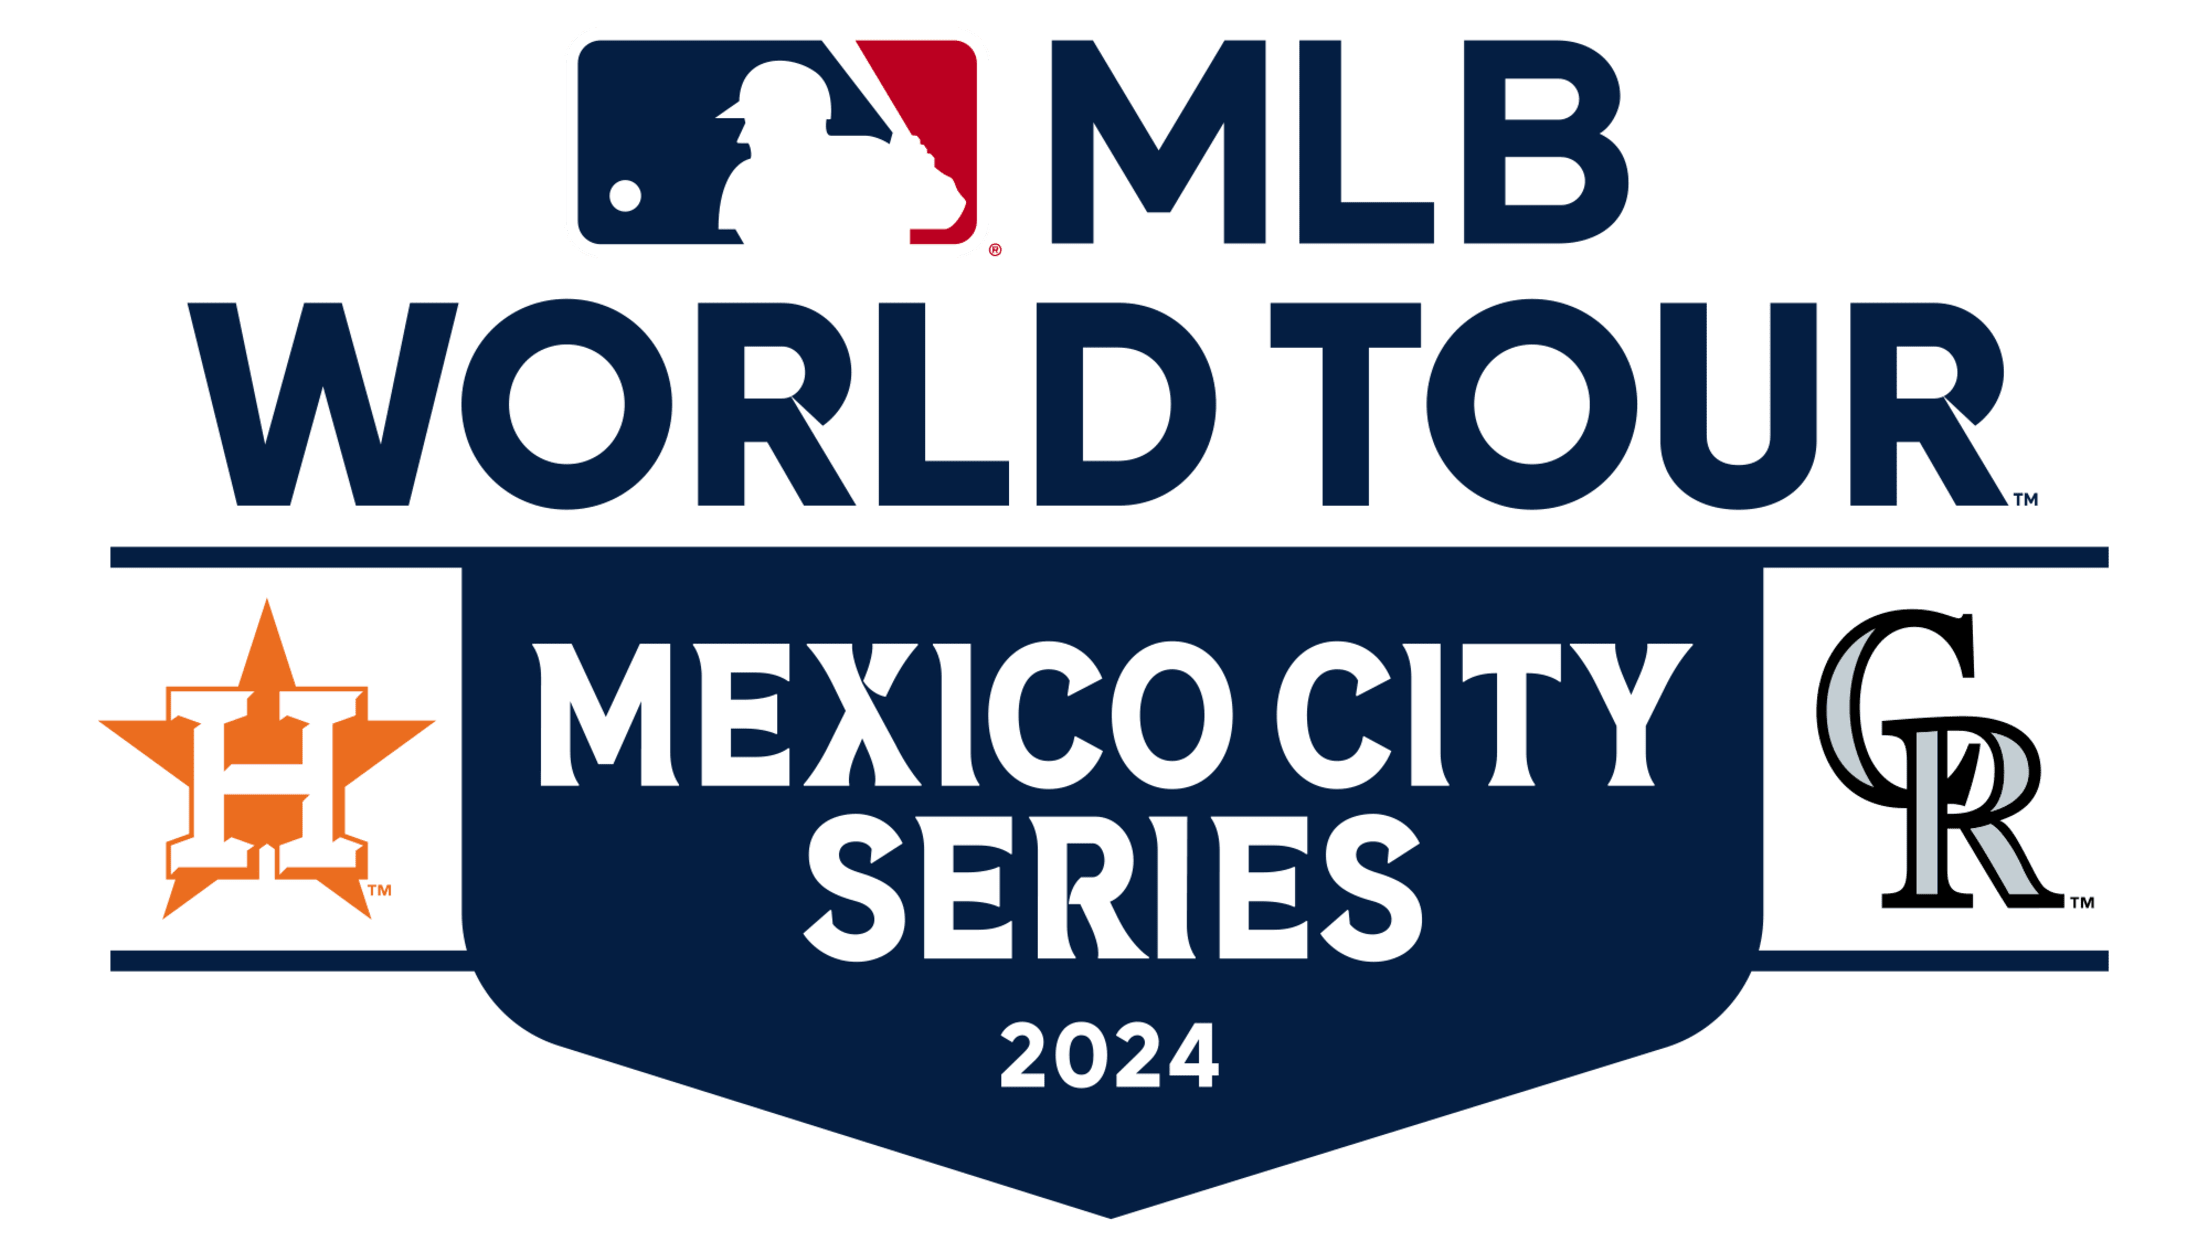 MLB London Series | MLB World Tour | MLB International | MLB.com